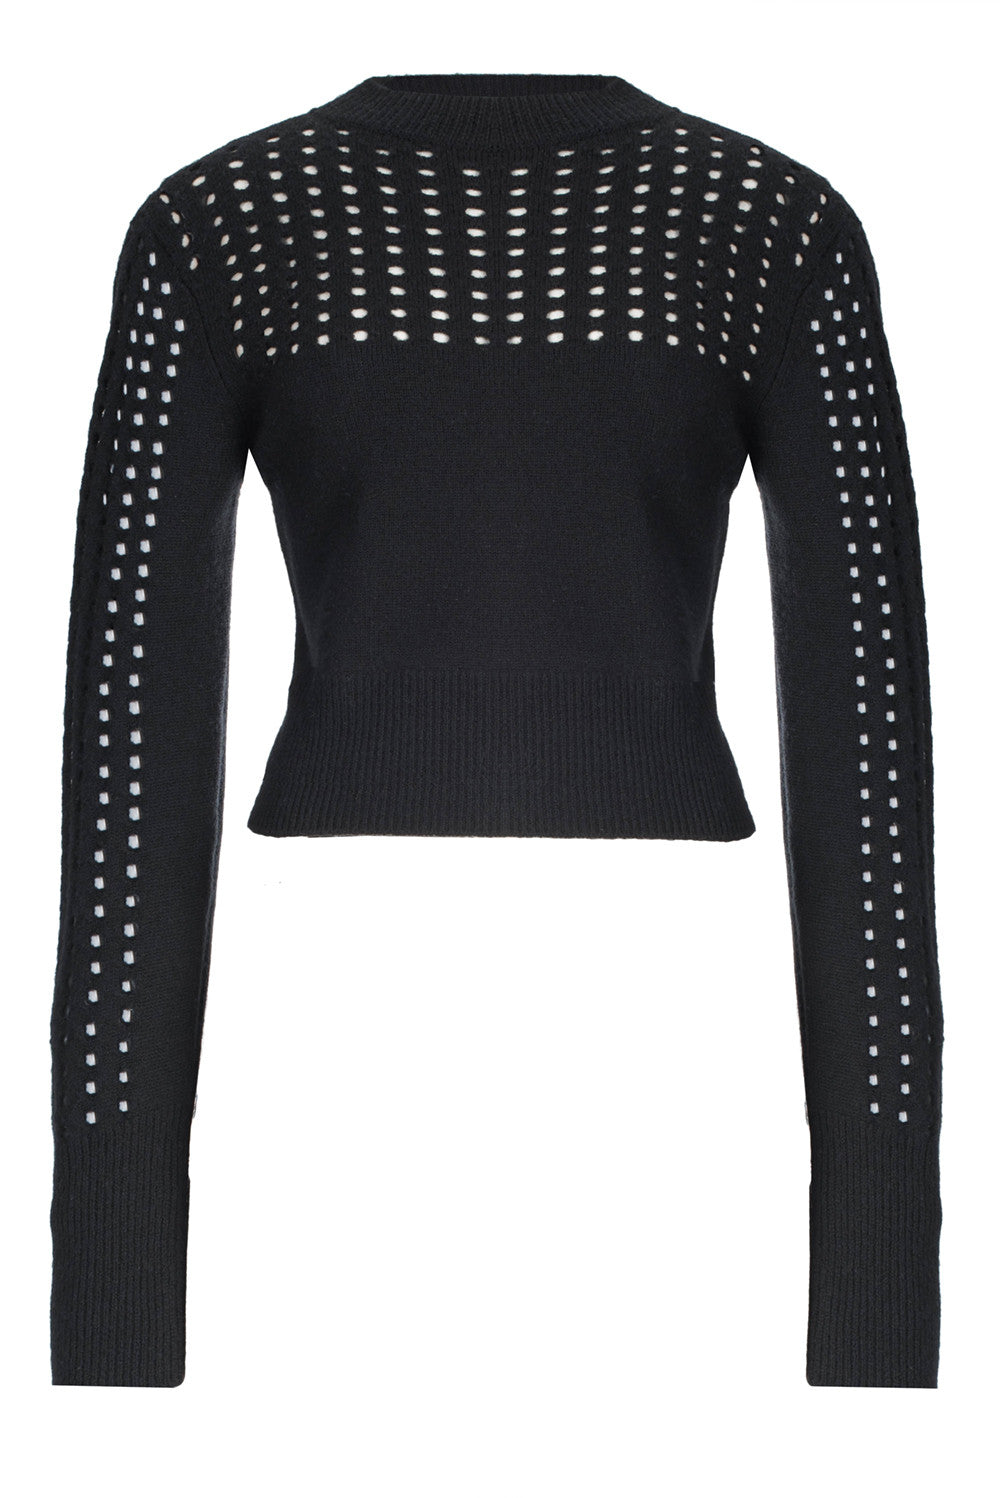 Crop Top Lightweight Black Wool Sweater | Relaxed Fit | Misha Nonoo